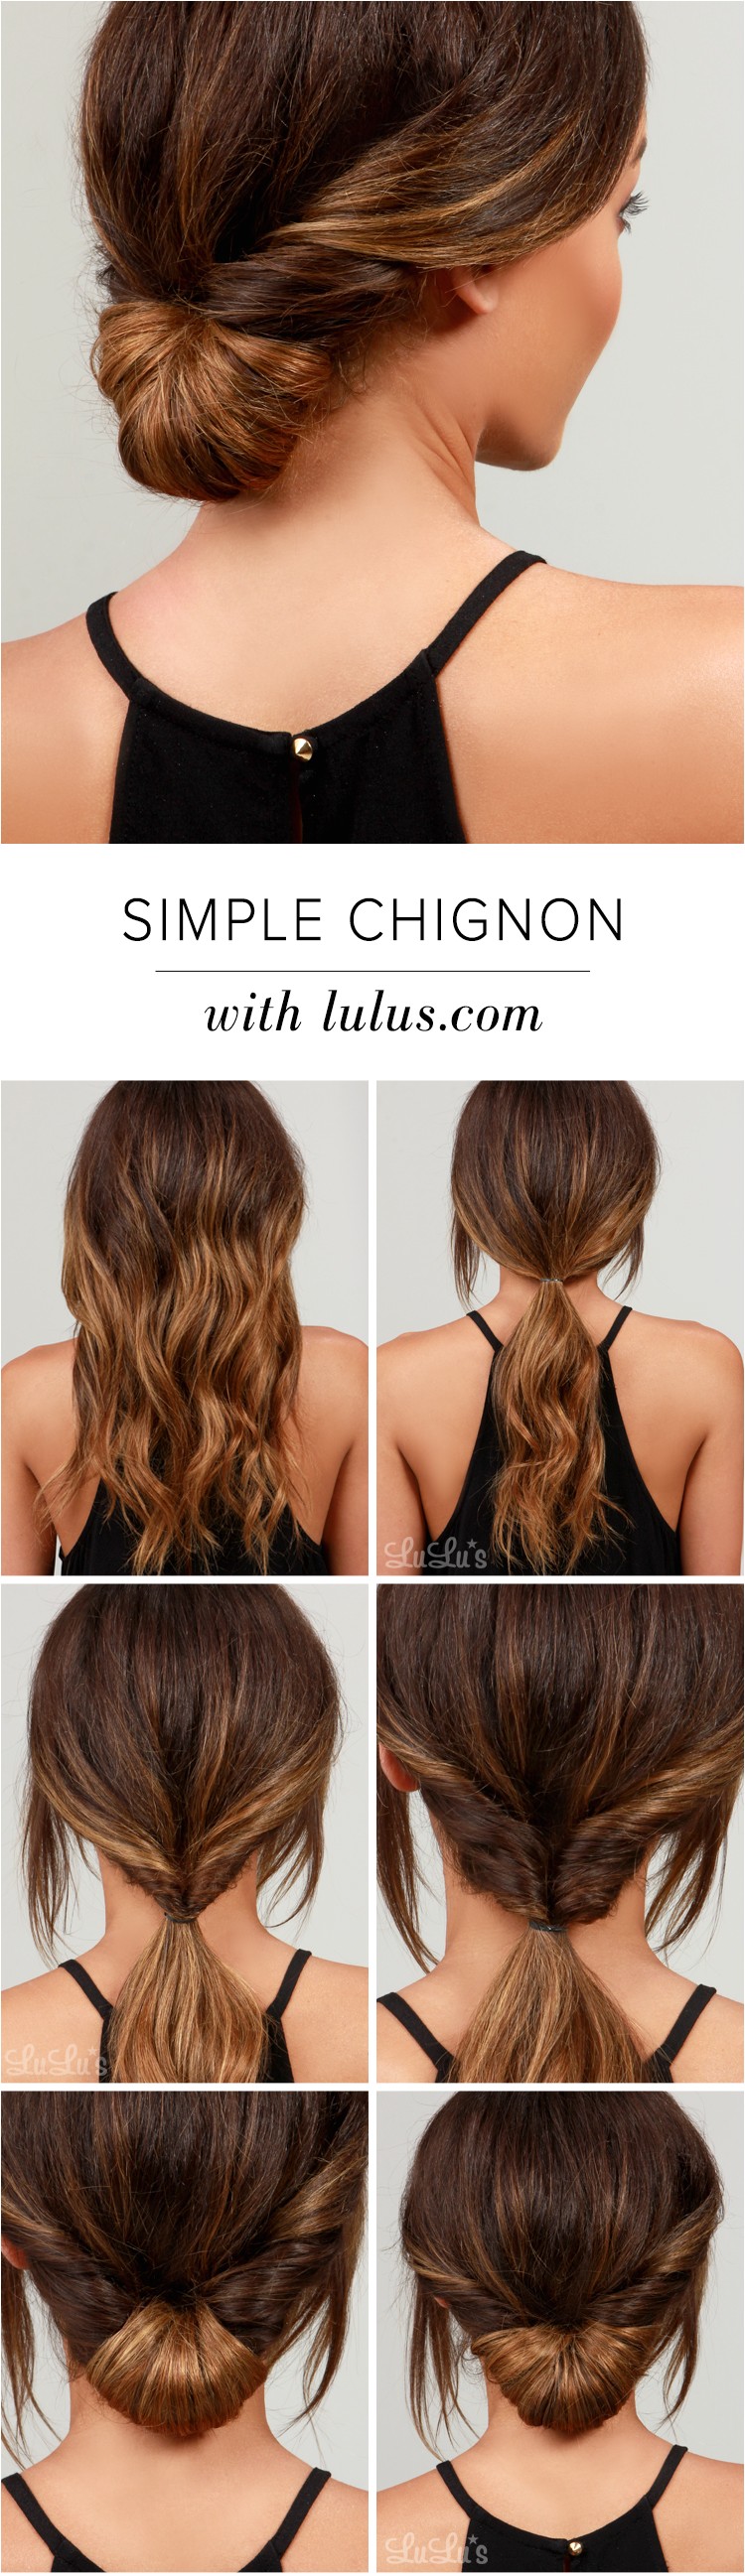 lulus how to simple chignon hair tutorial